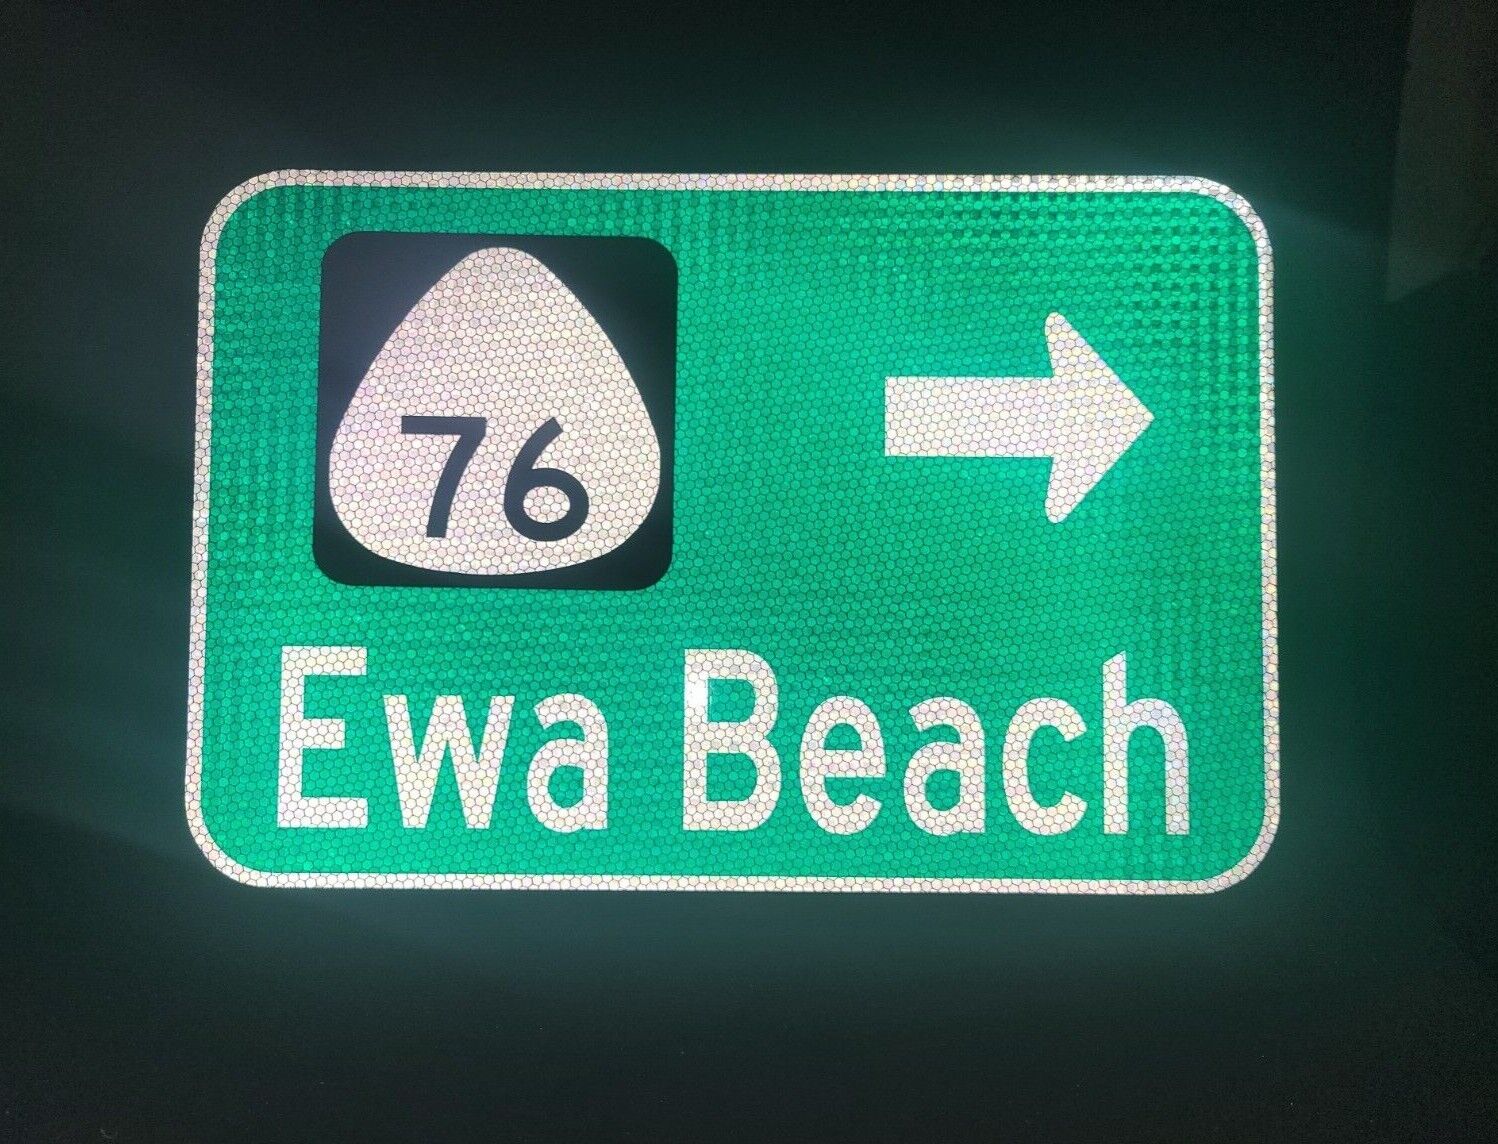 EWA BEACH, Hawaii Hwy 76 route road sign 18